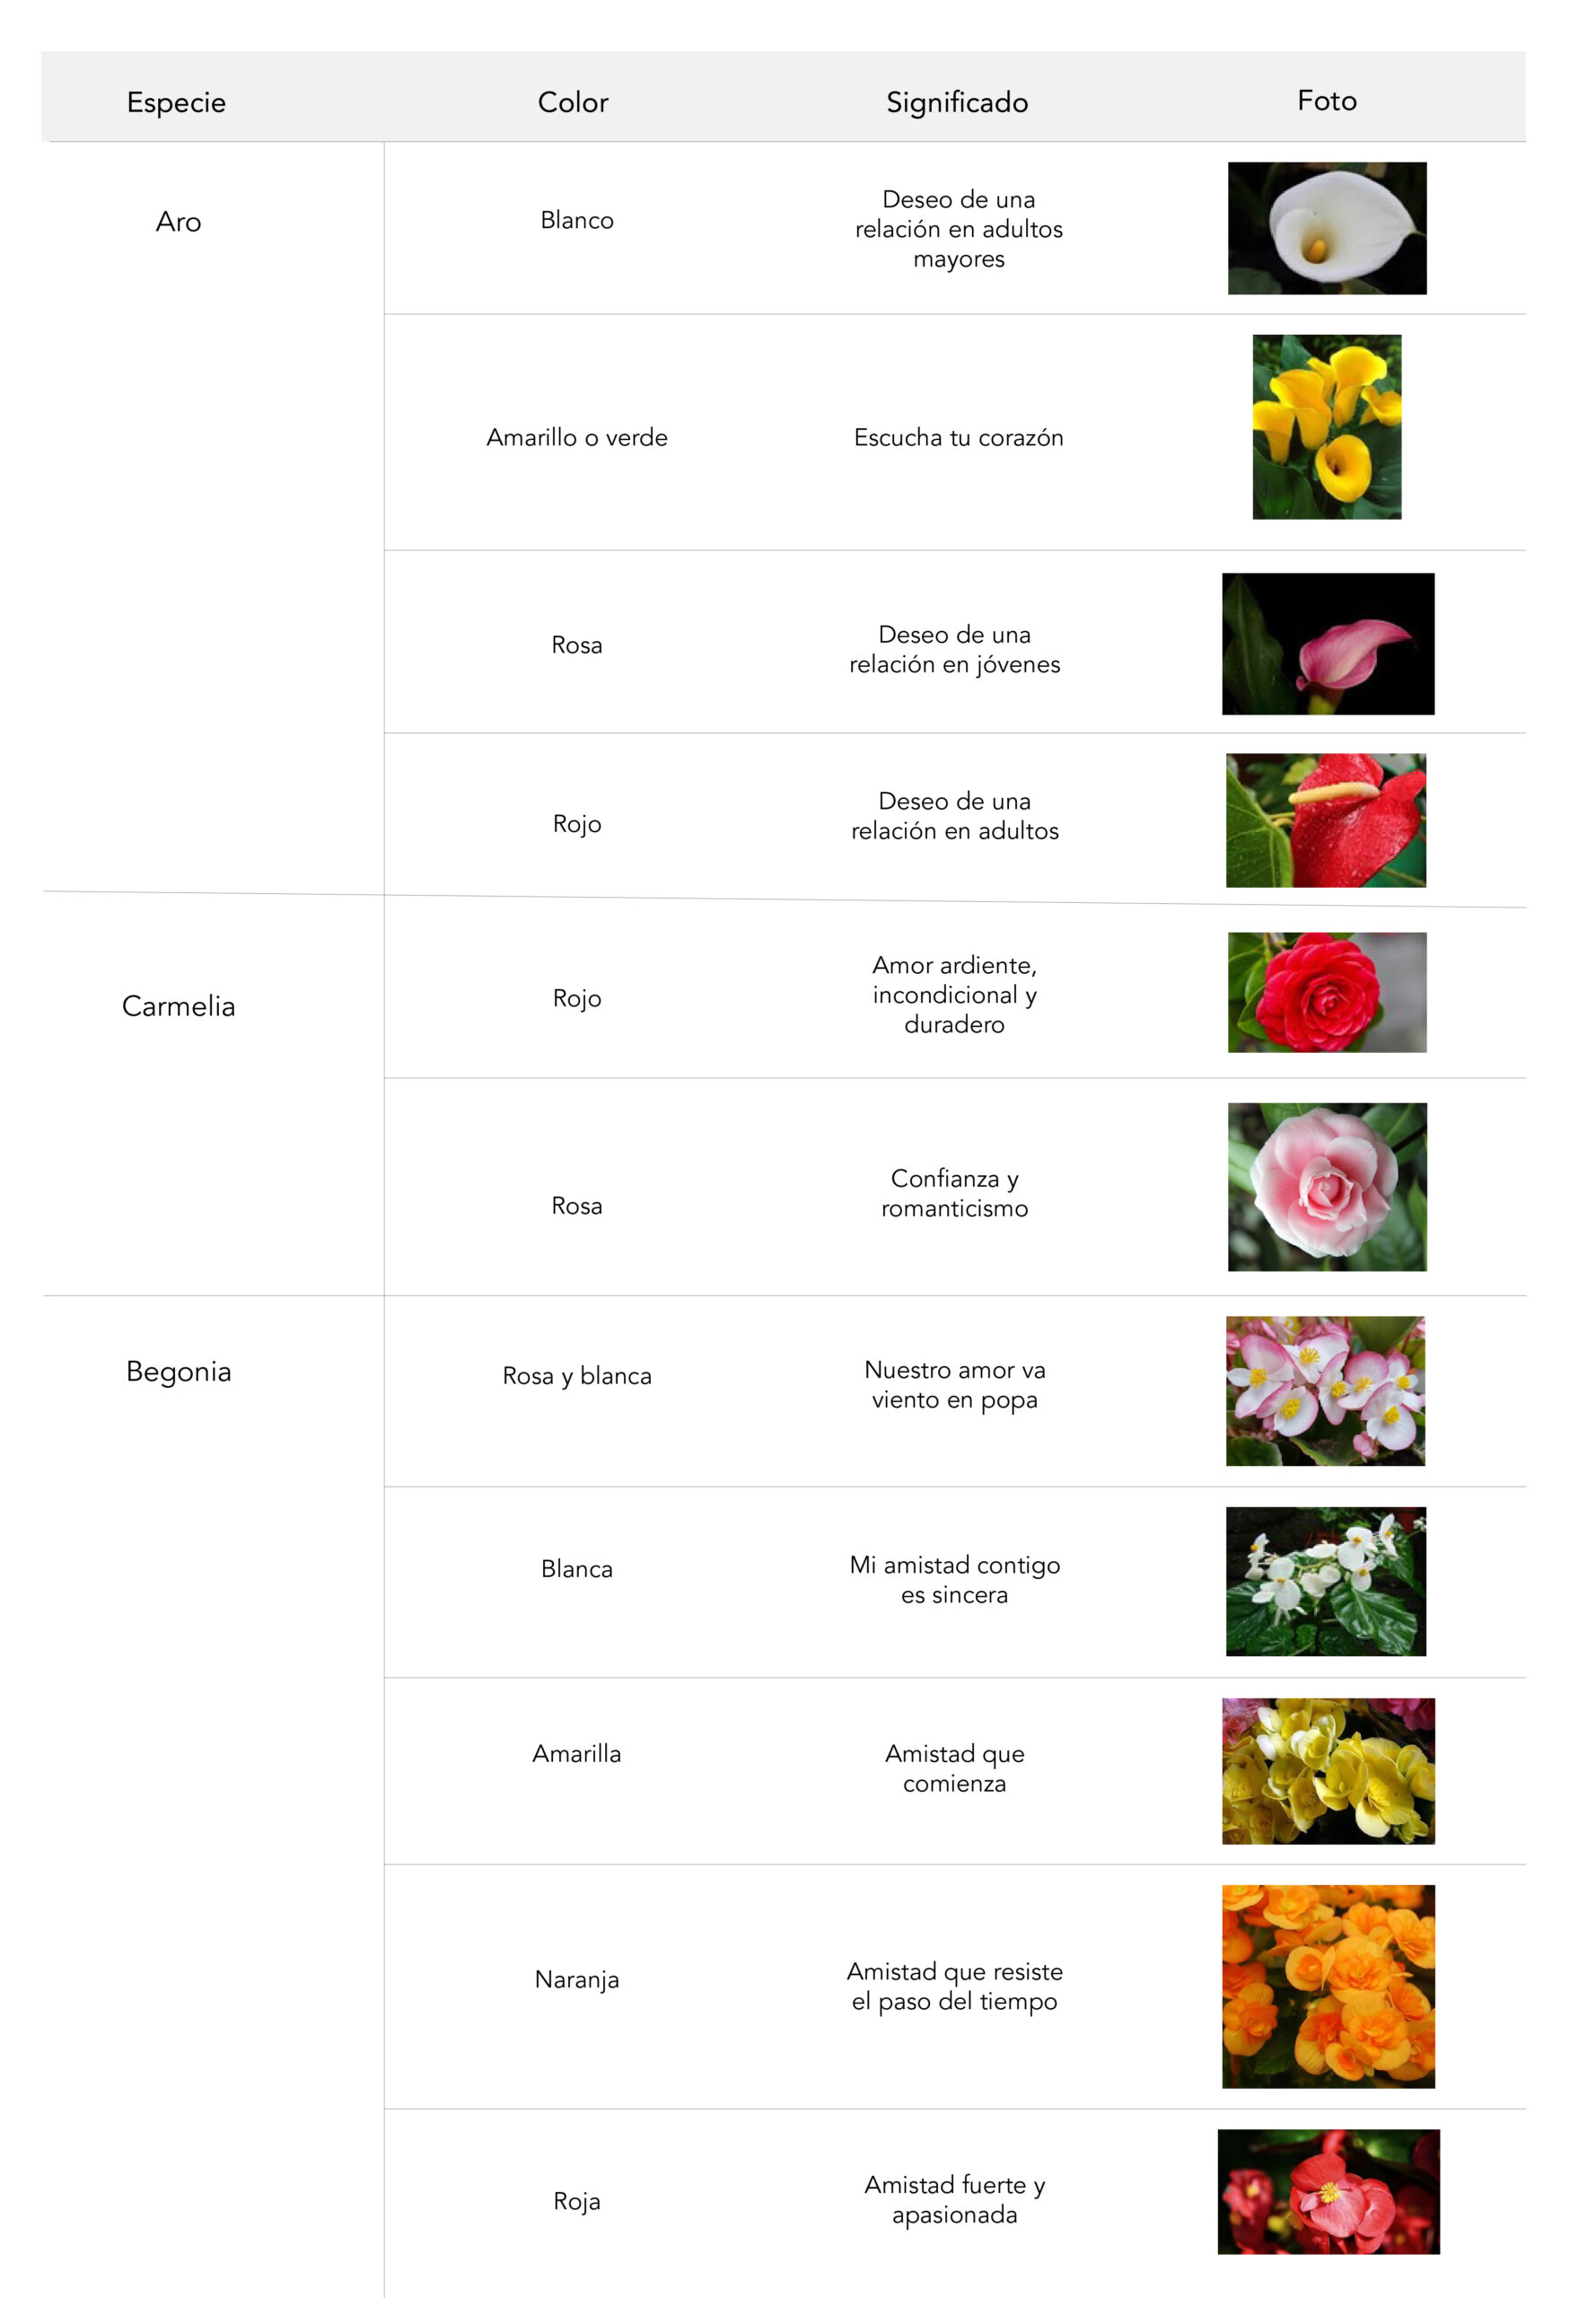 Guinness alojamiento A través de El lenguaje de las flores – OPF NEWS